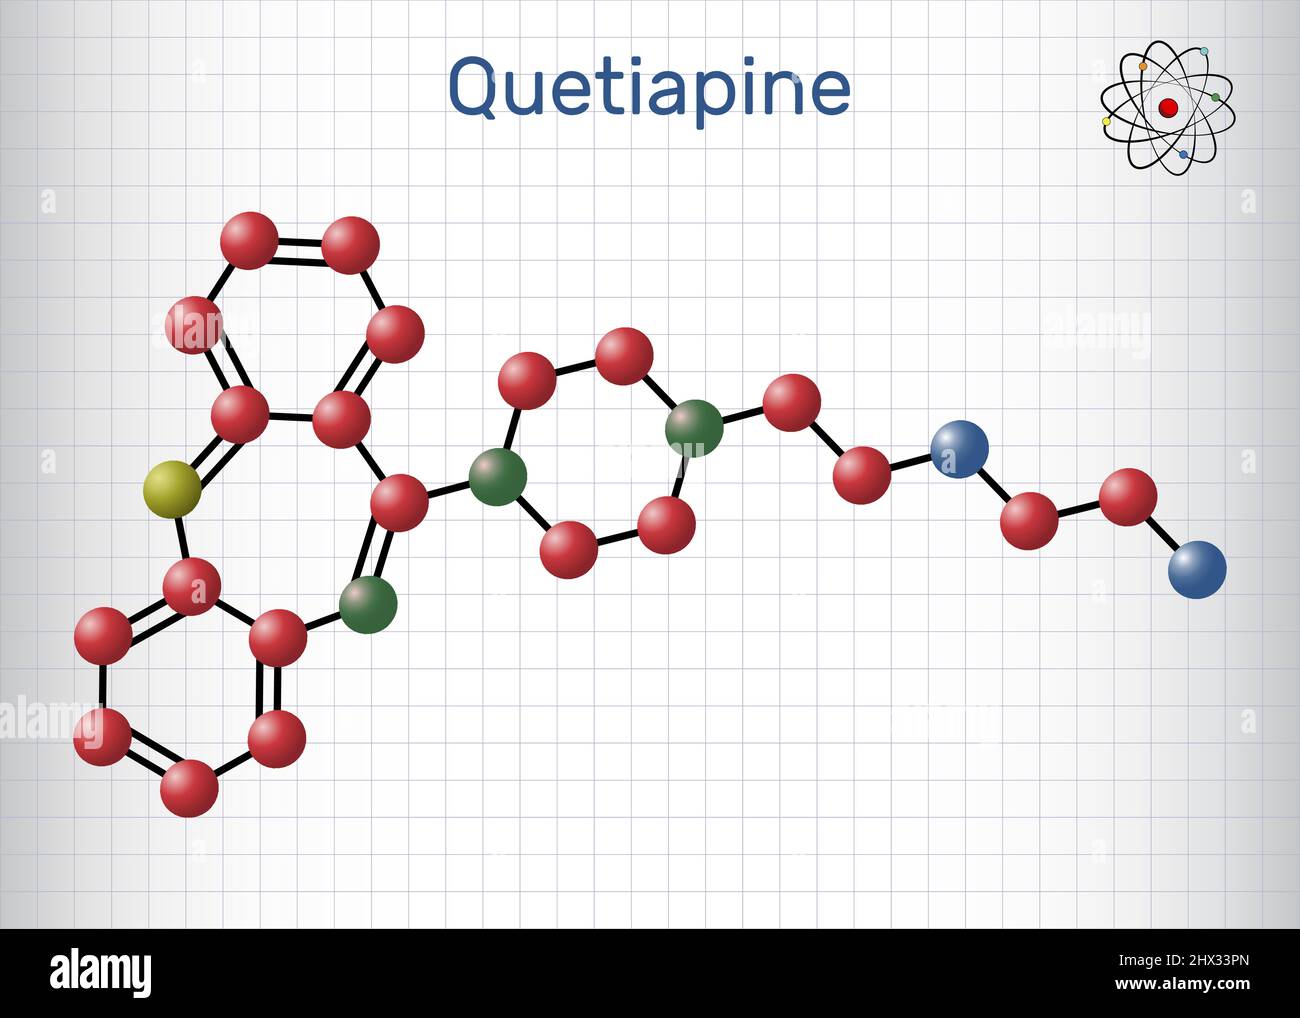 Quetiapine molecule. It is neuroleptic, atypical antipsychotic medication for the treatment of schizophrenia, bipolar disorder. Molecule model. Sheet Stock Vector